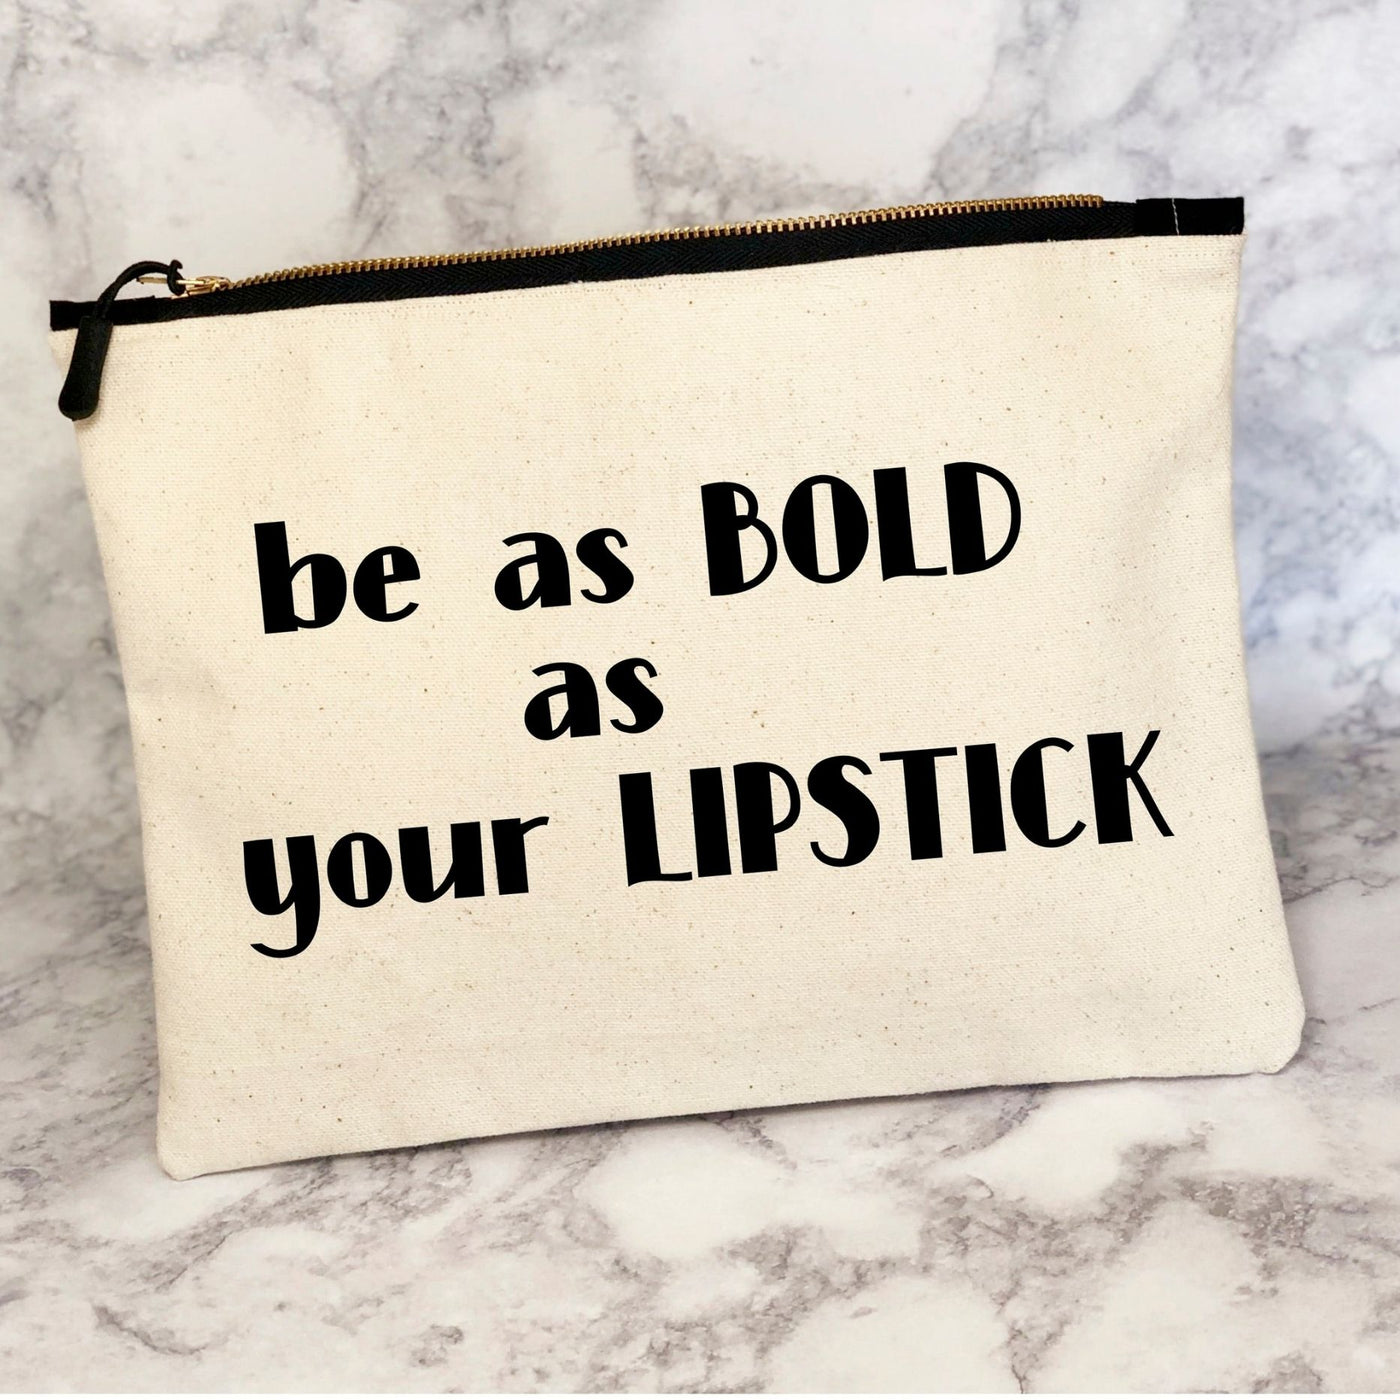 be bold lipstick - canvas zip bag